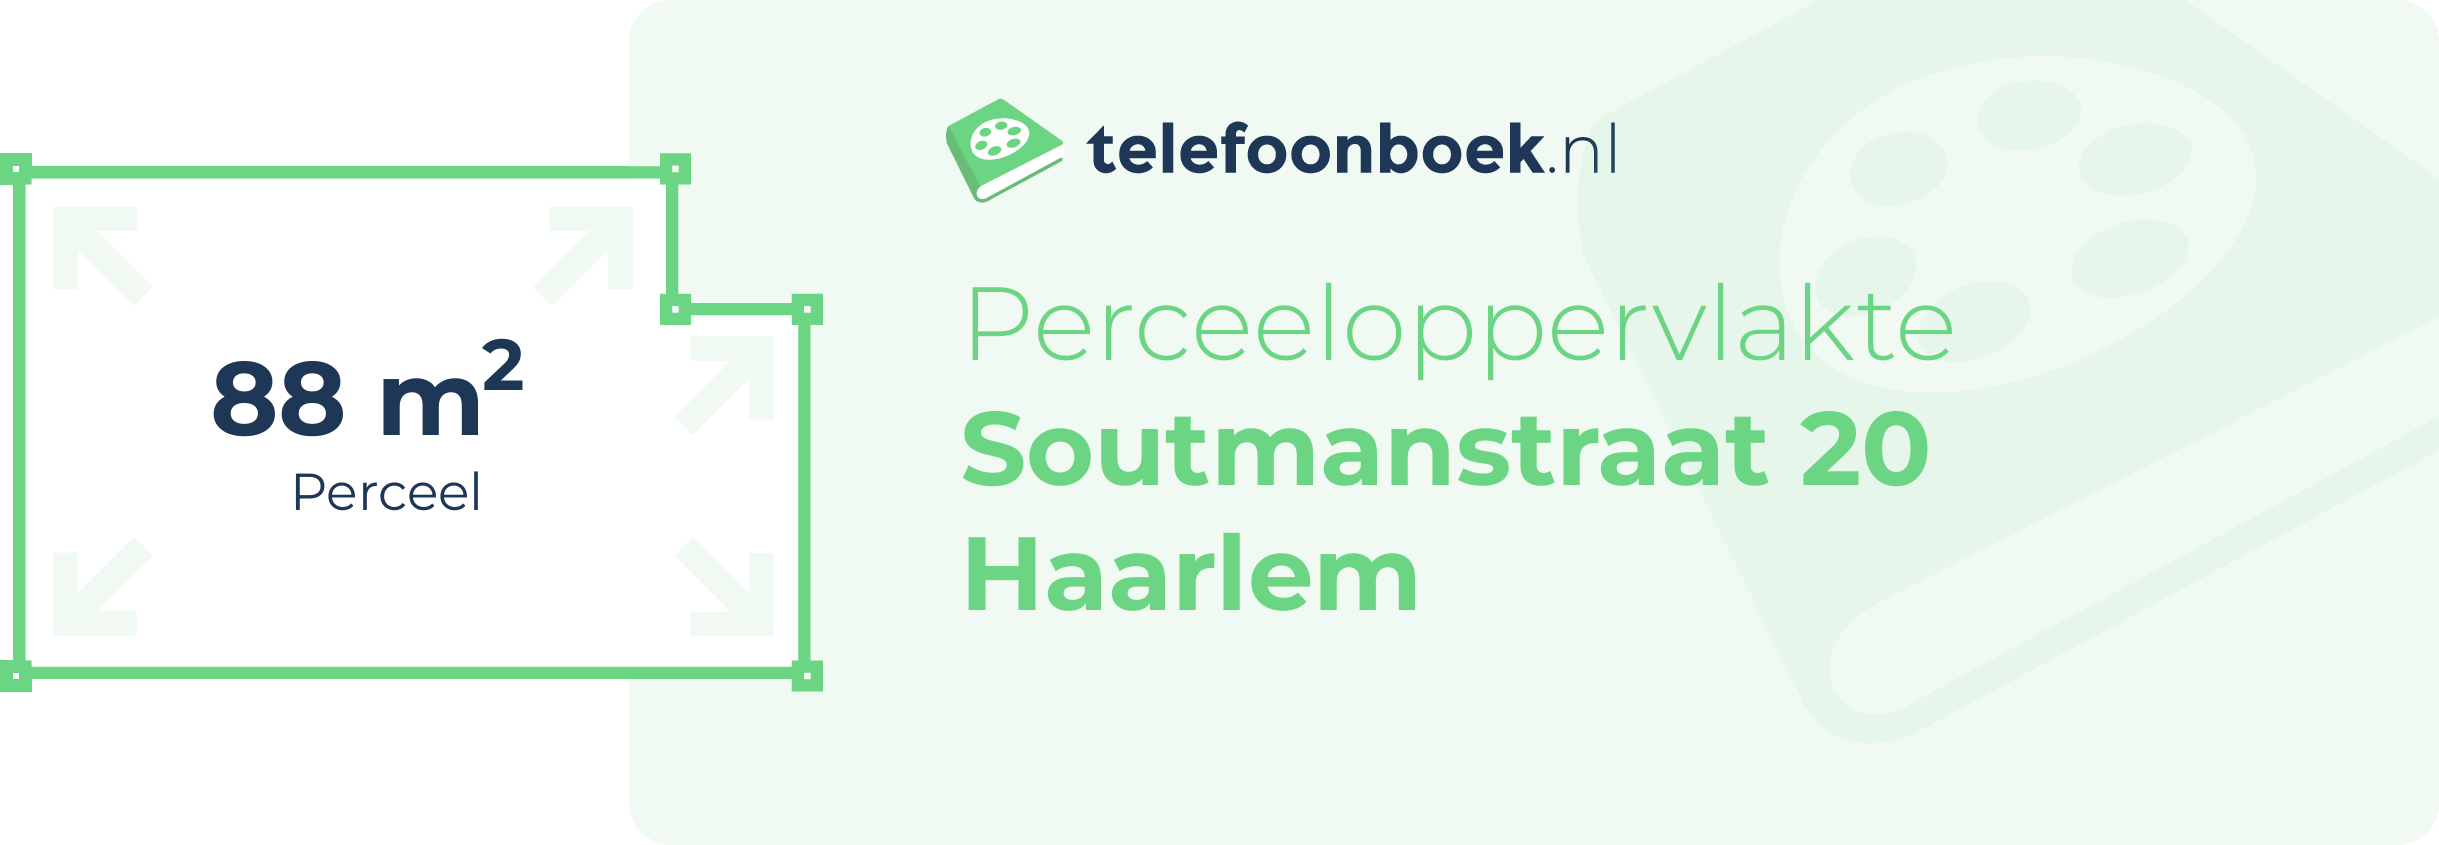 Perceeloppervlakte Soutmanstraat 20 Haarlem